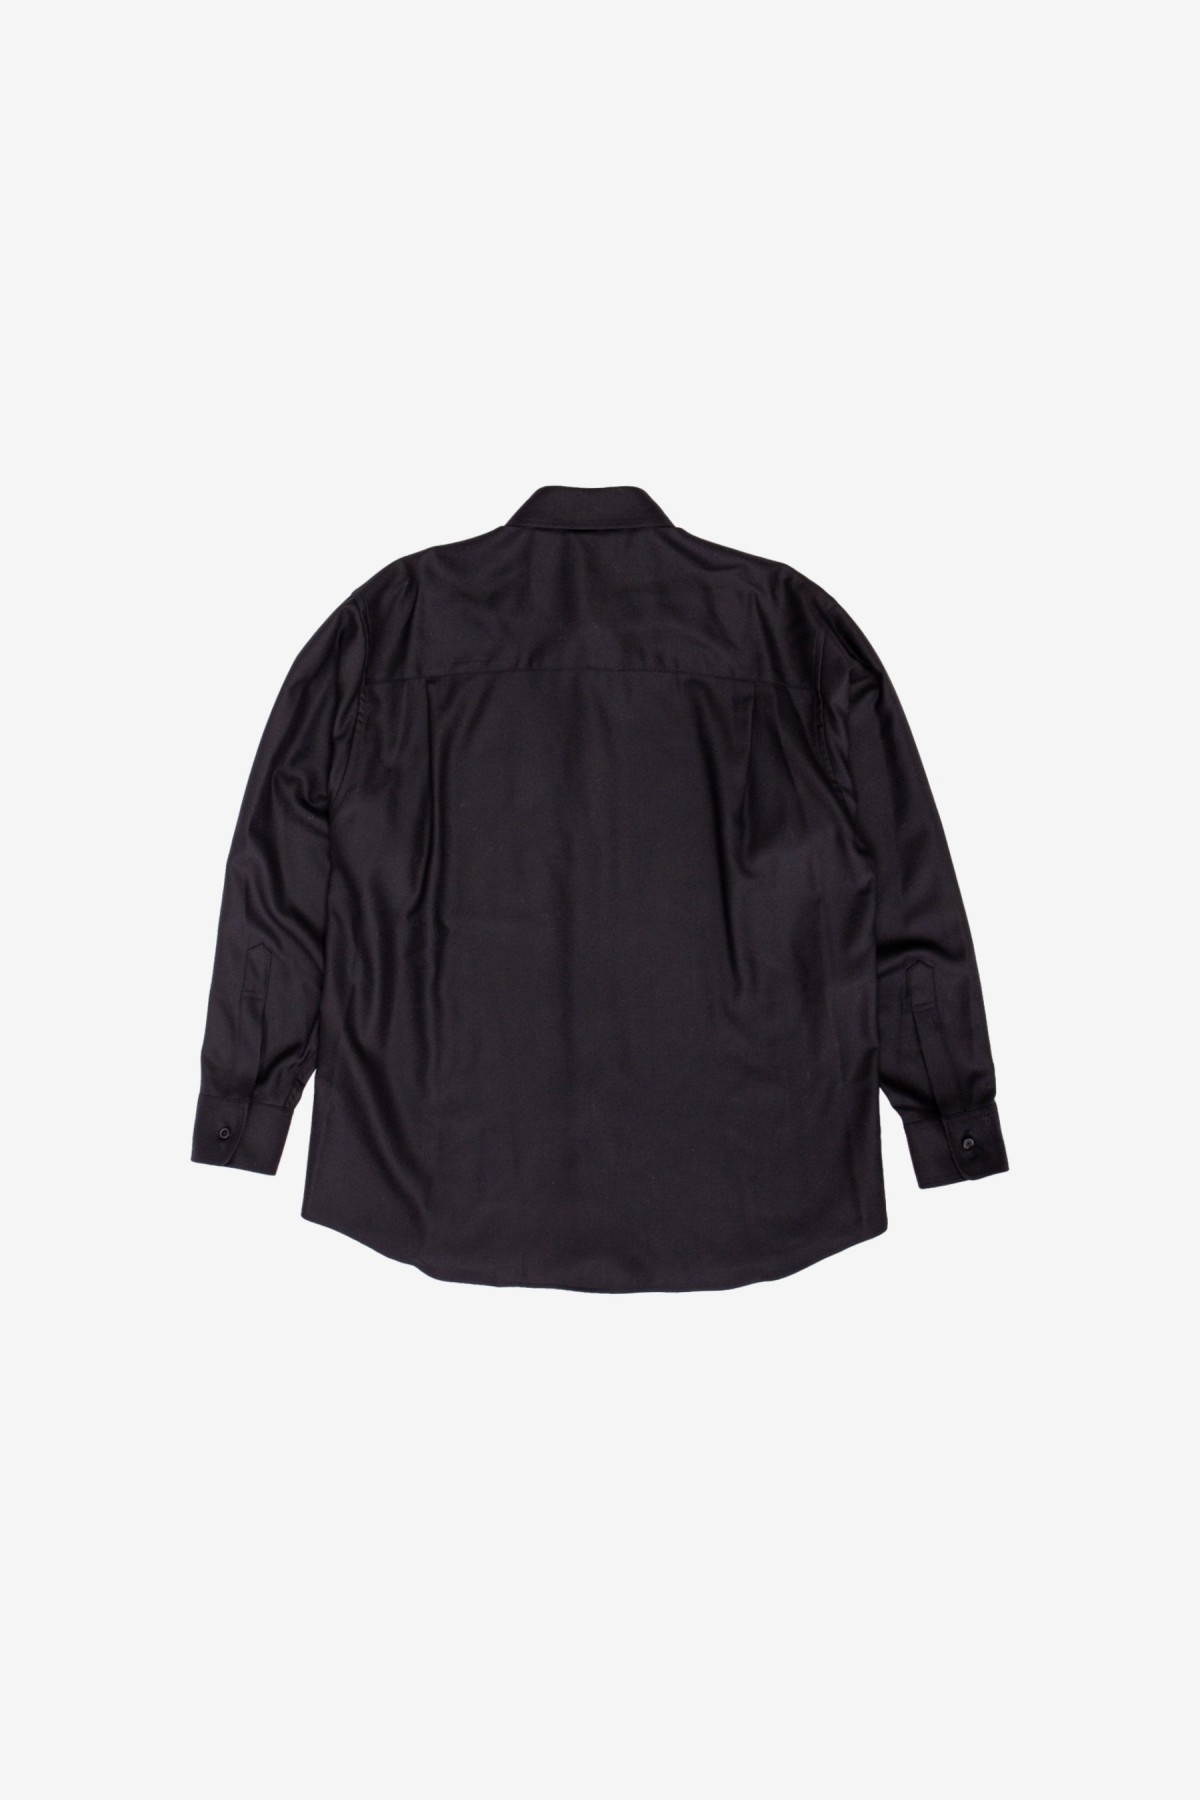 Super Light Wool Shirt in Black - Auralee | Afura Store